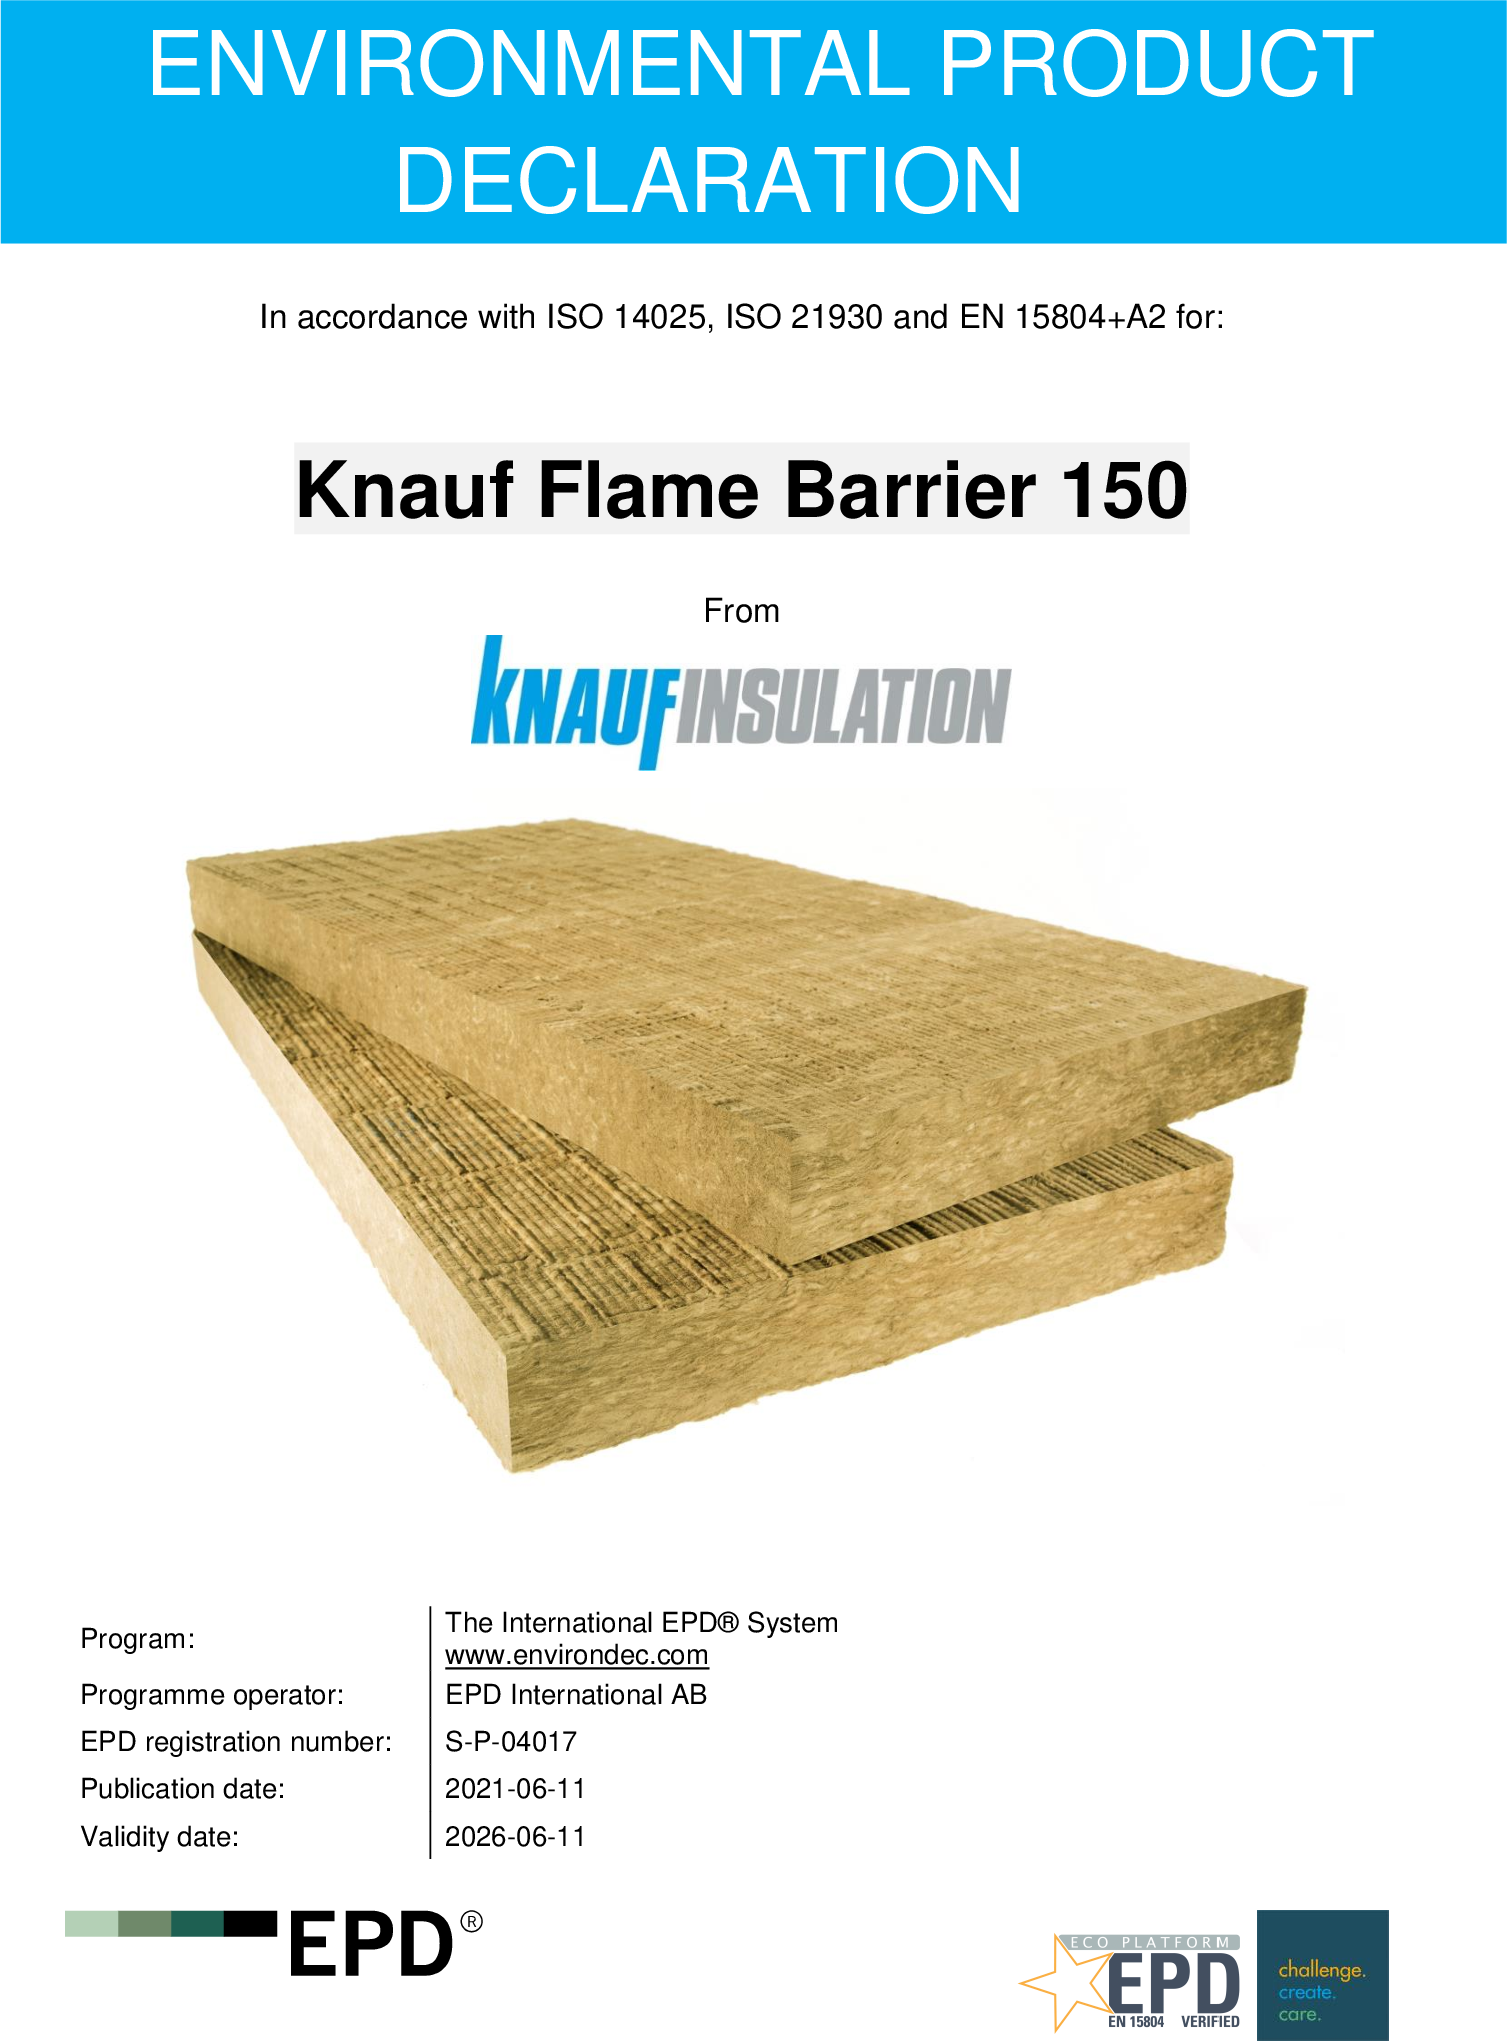 Knauf Flame Barrier 150